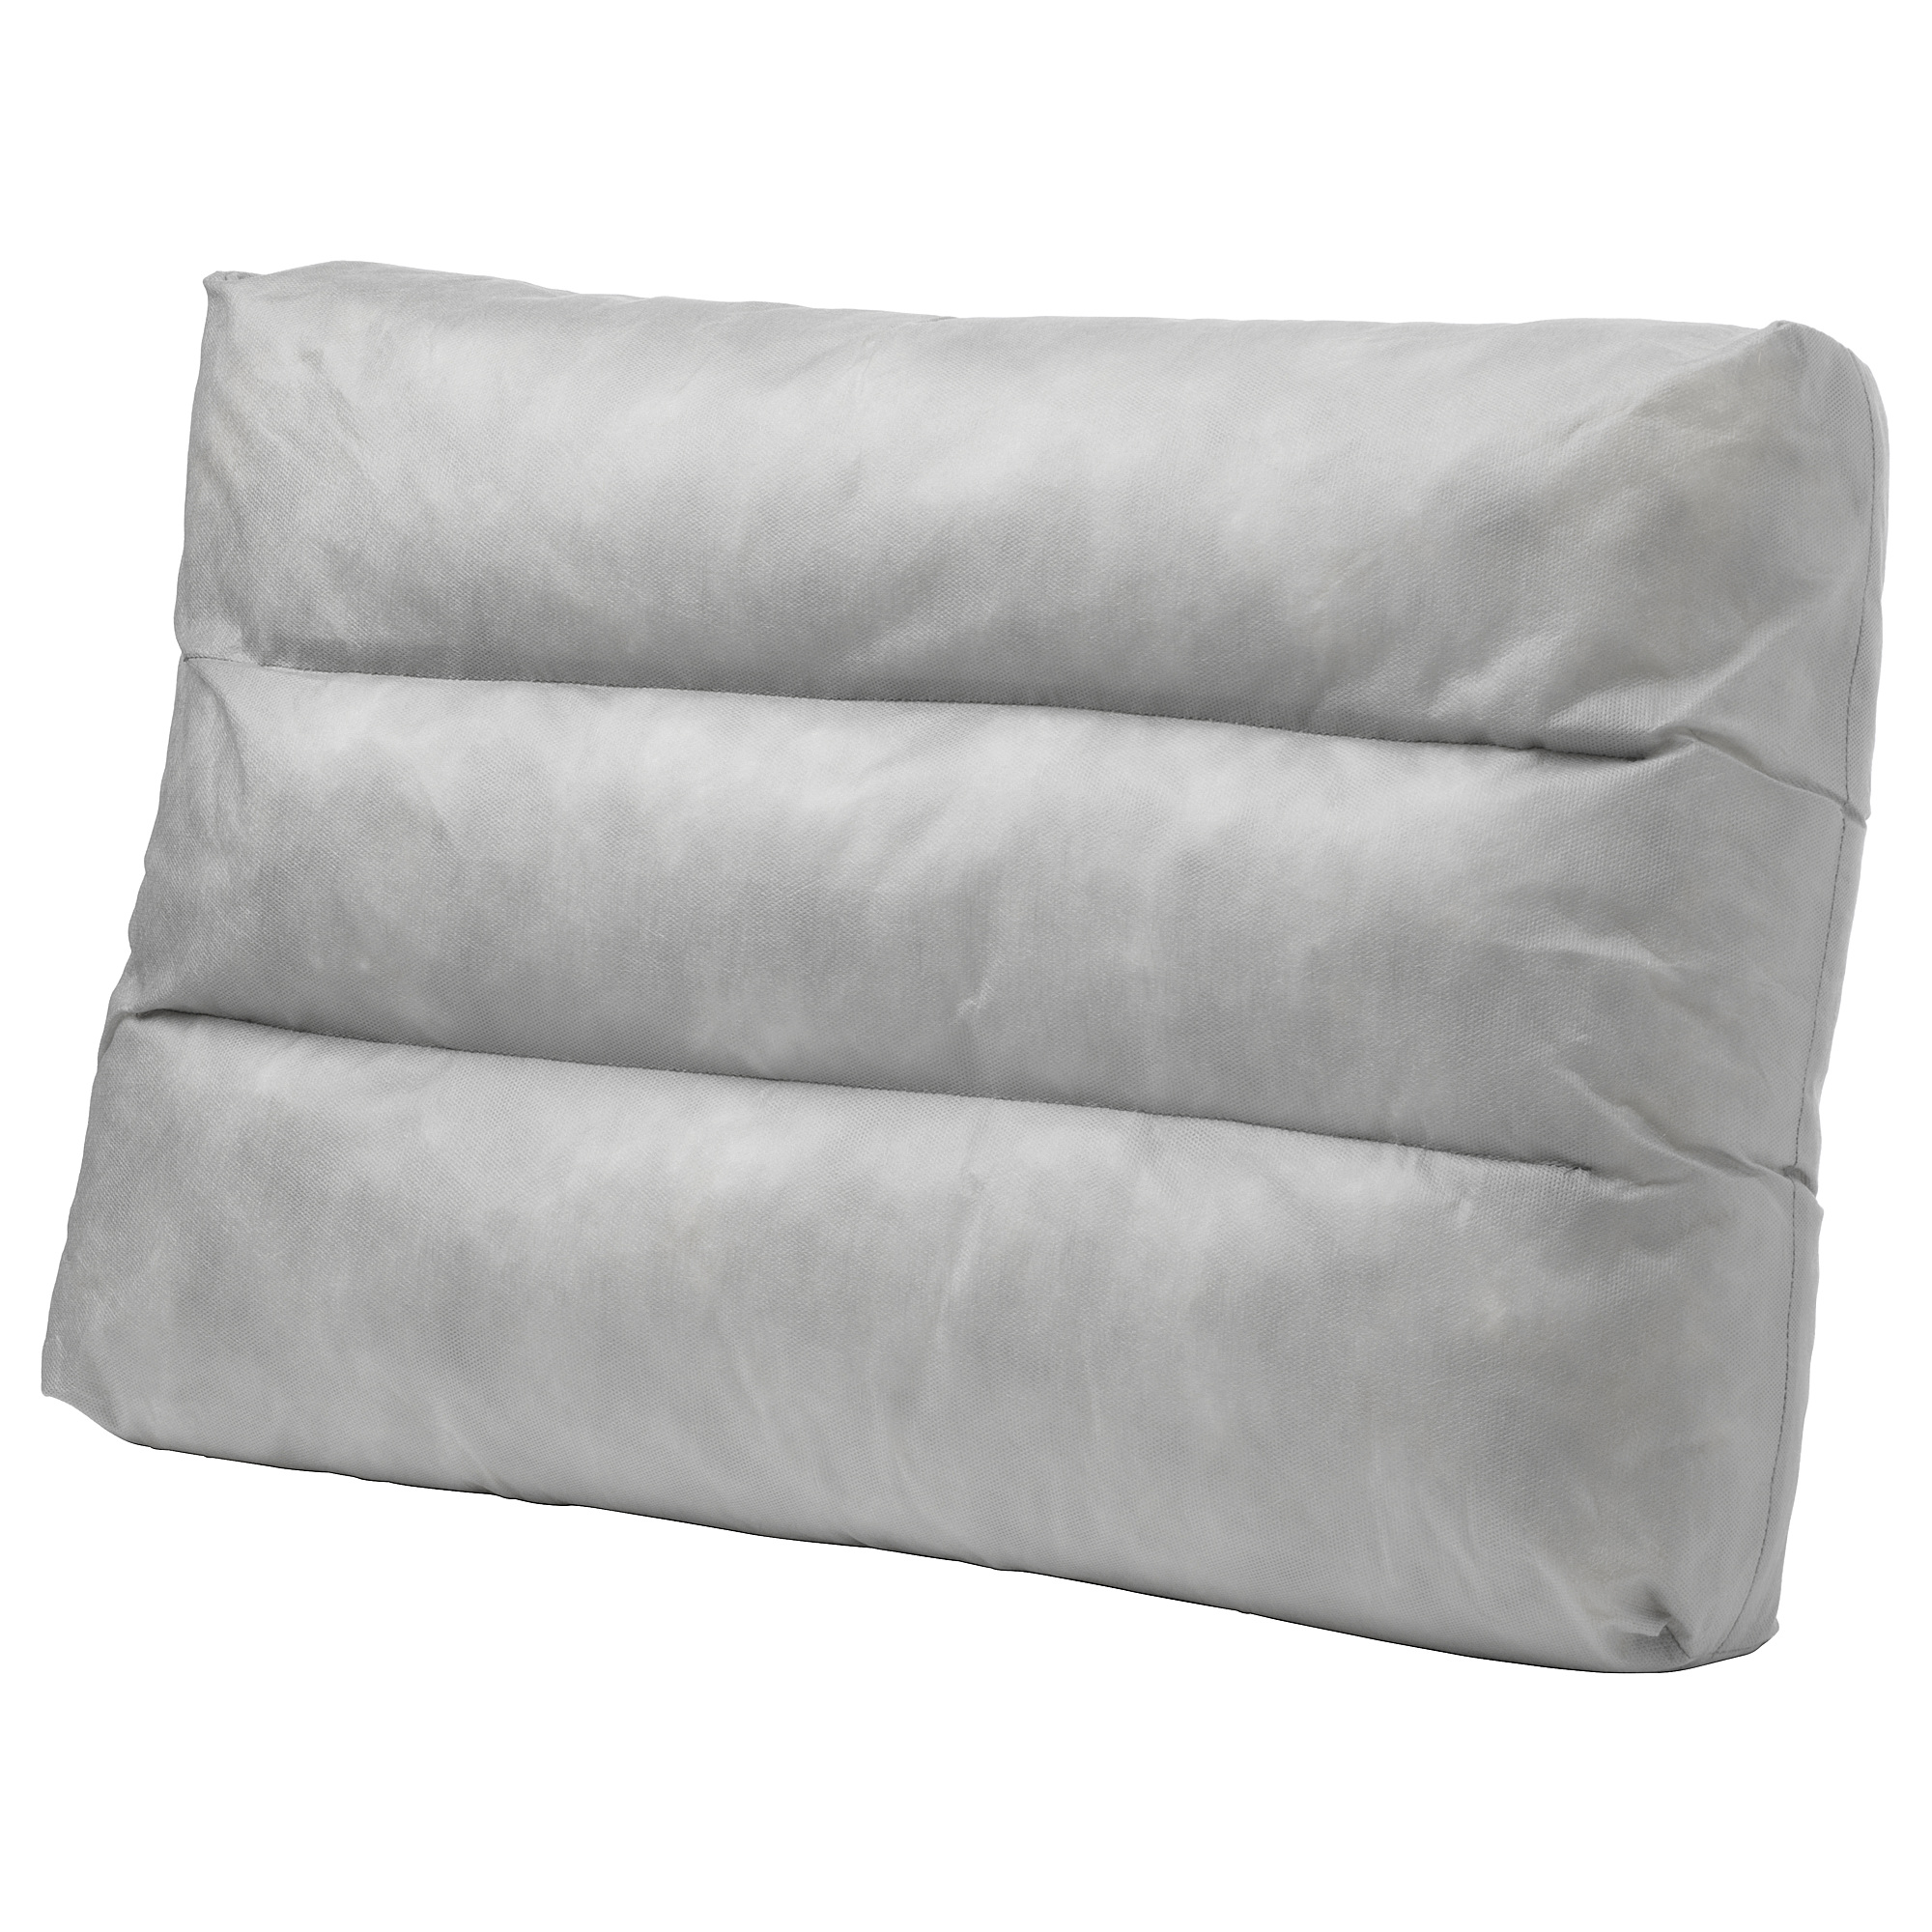 FRÖSÖN/DUVHOLMEN Back cushion, outdoor, dark gray, 243/8x173/8 - IKEA